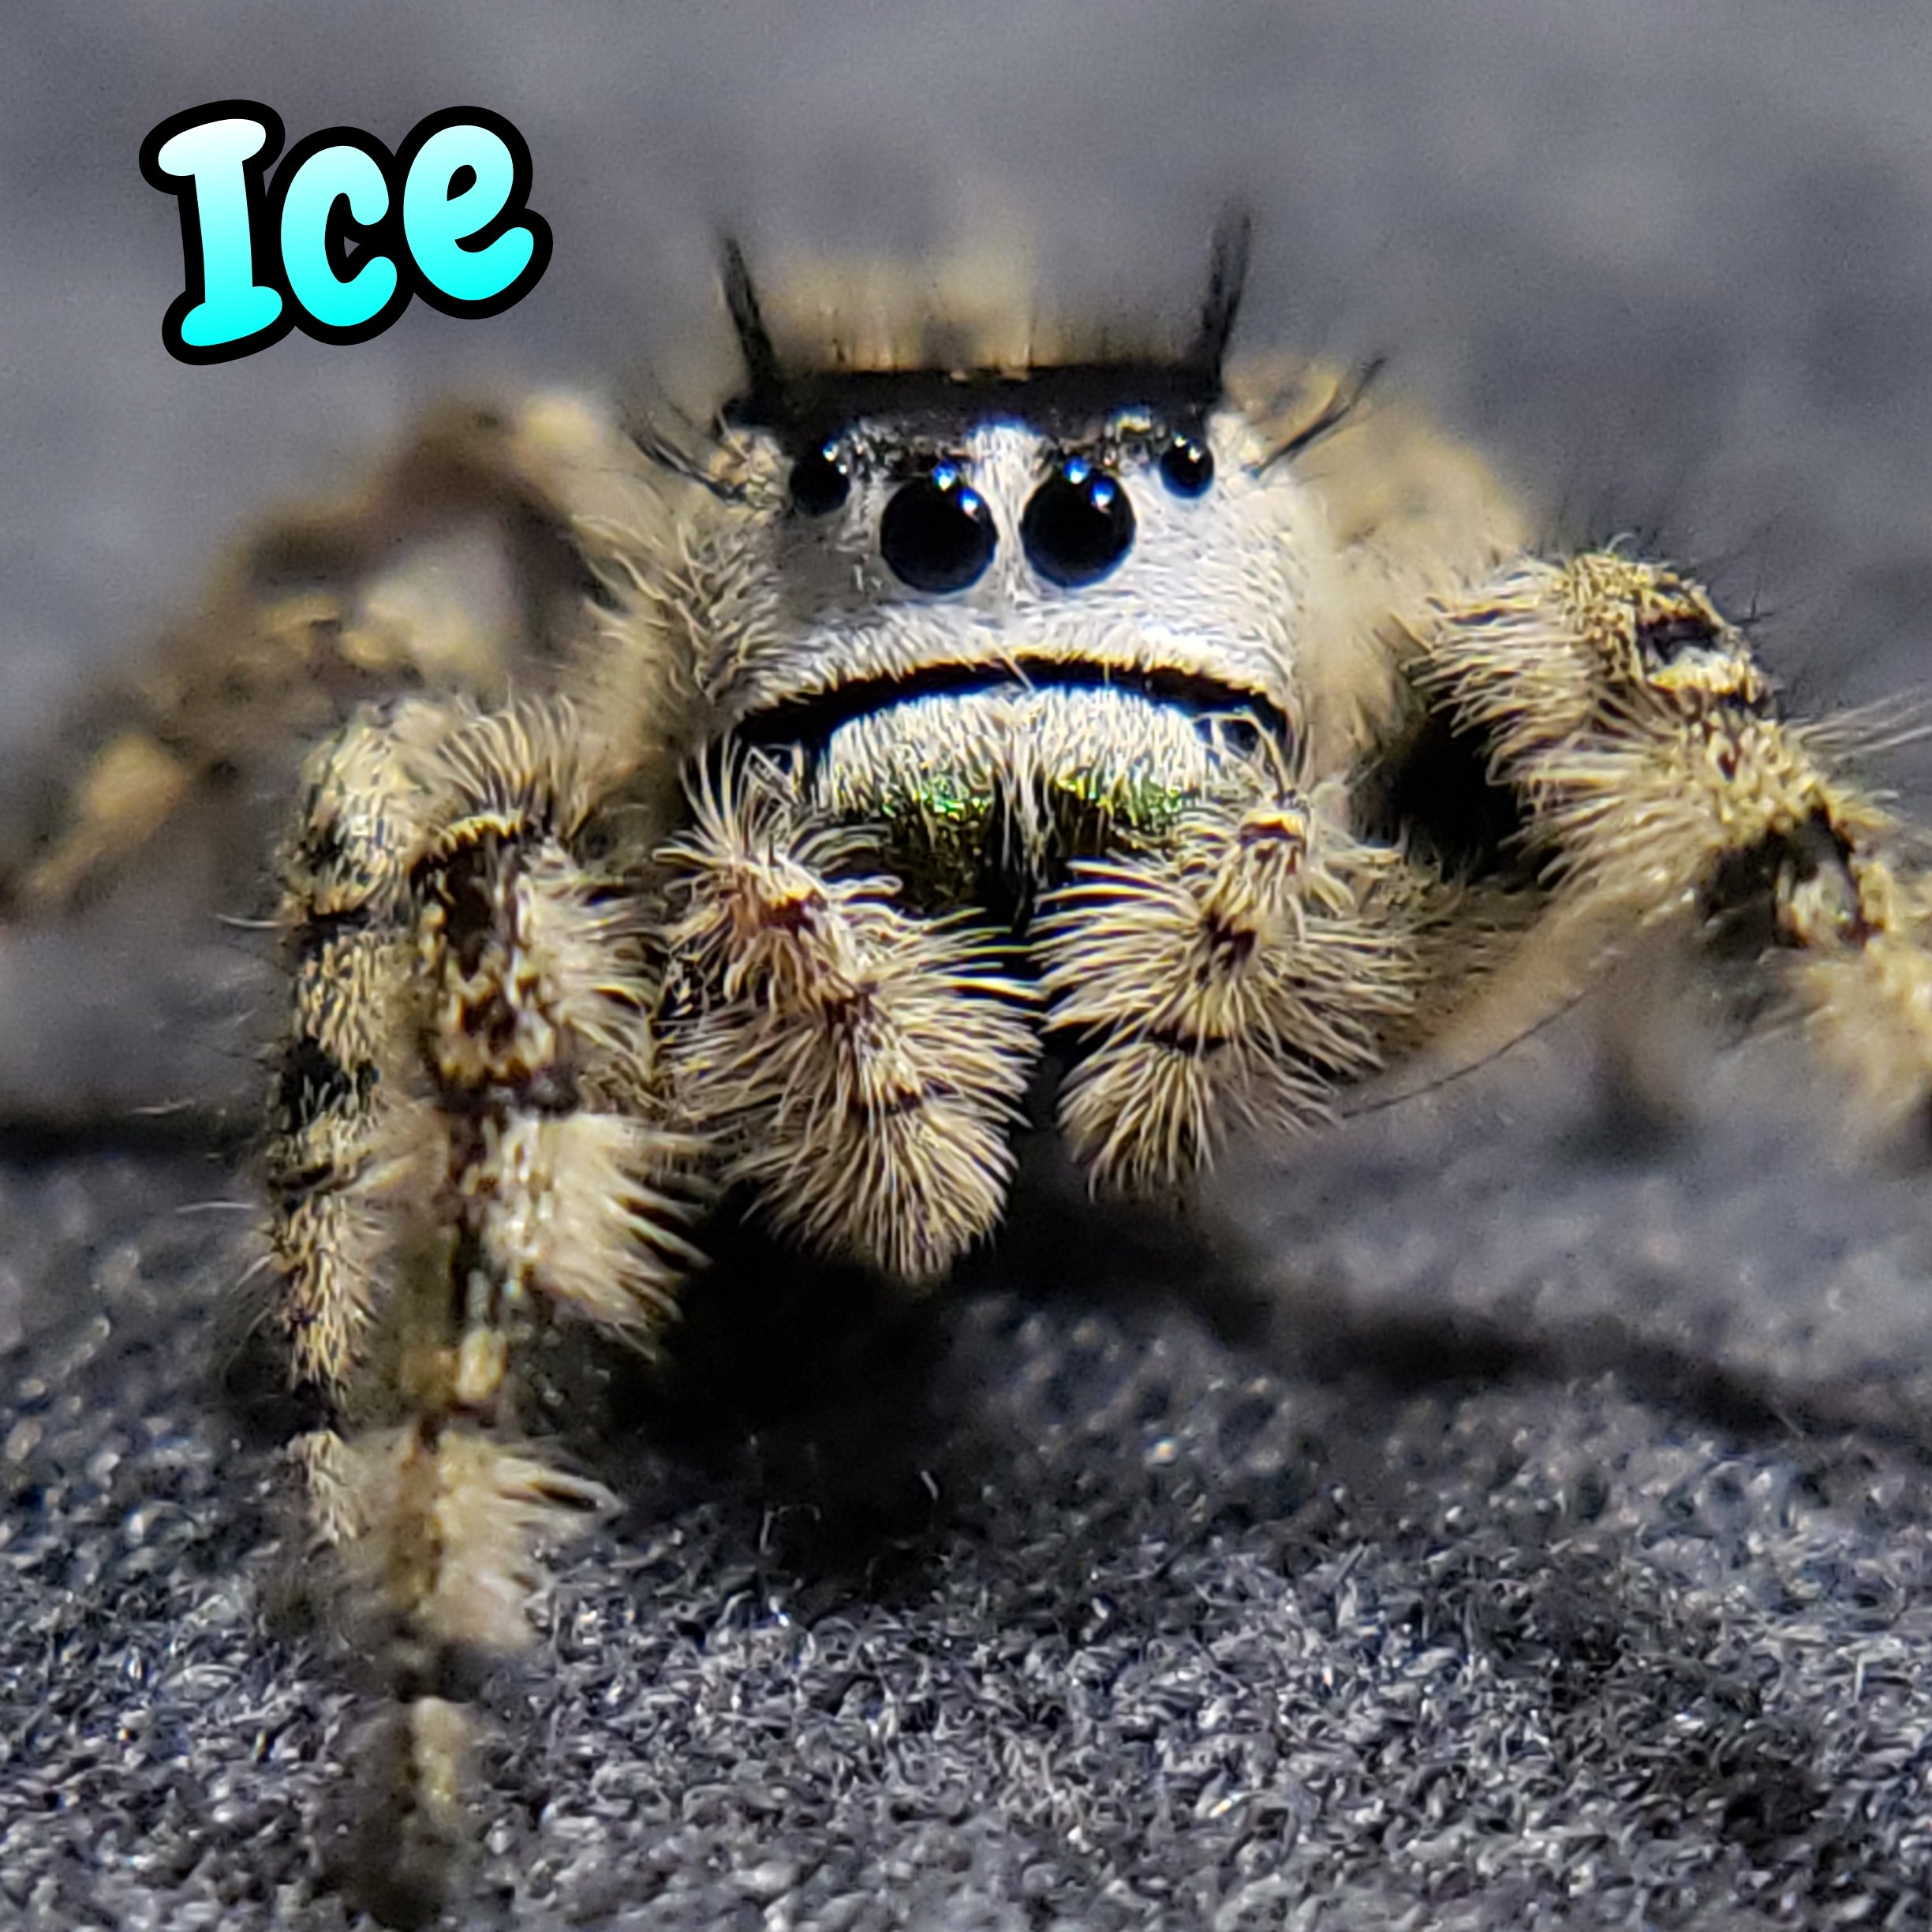 Otiosus Jumping Spider "Ice" (High White)